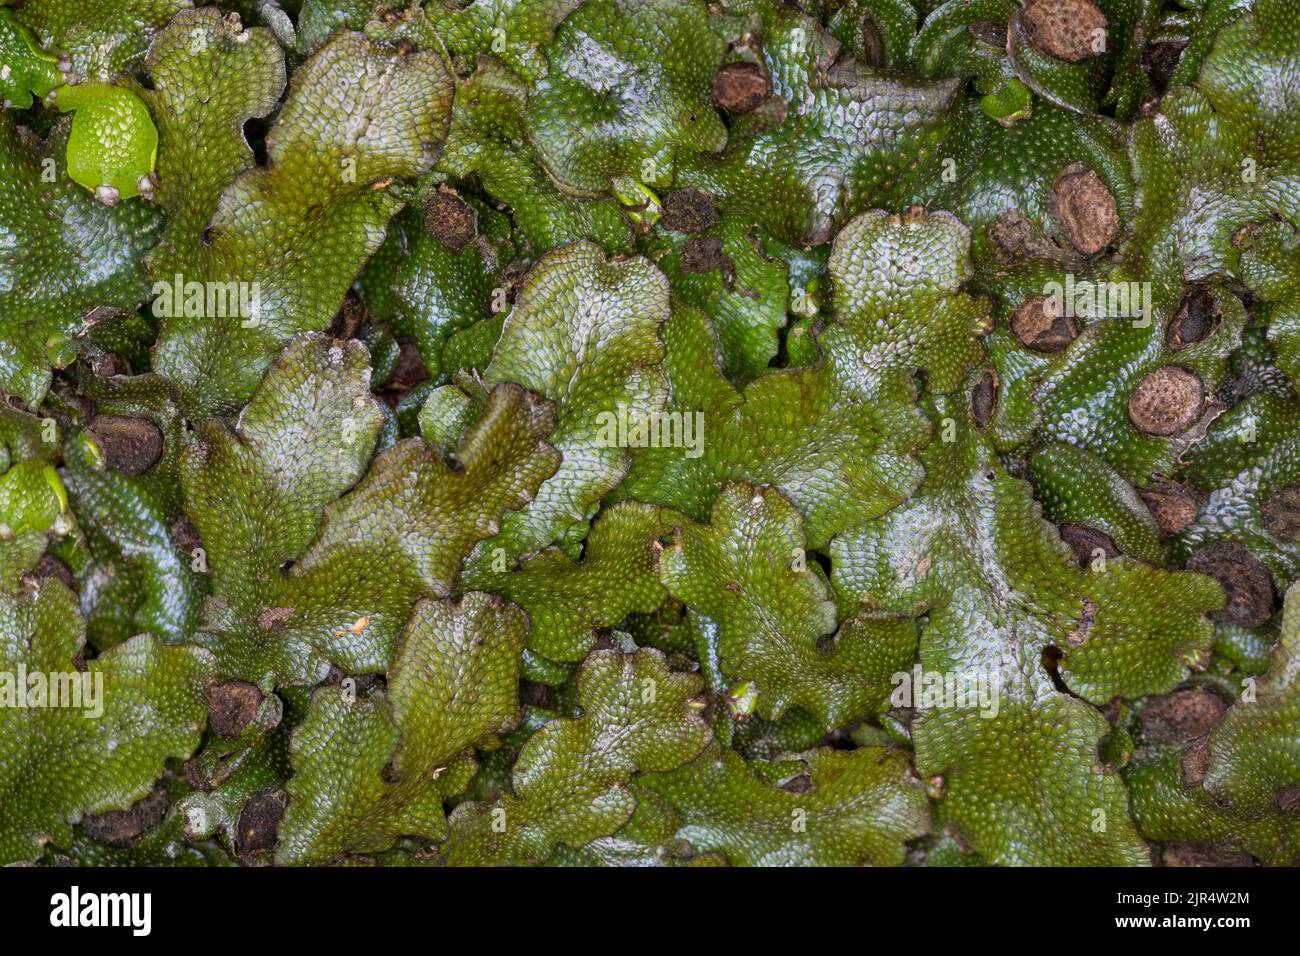 Great scented liverwort, Snakeskin liverwort (Conocephalum conicum), close-up from above, Germany Stock Photo